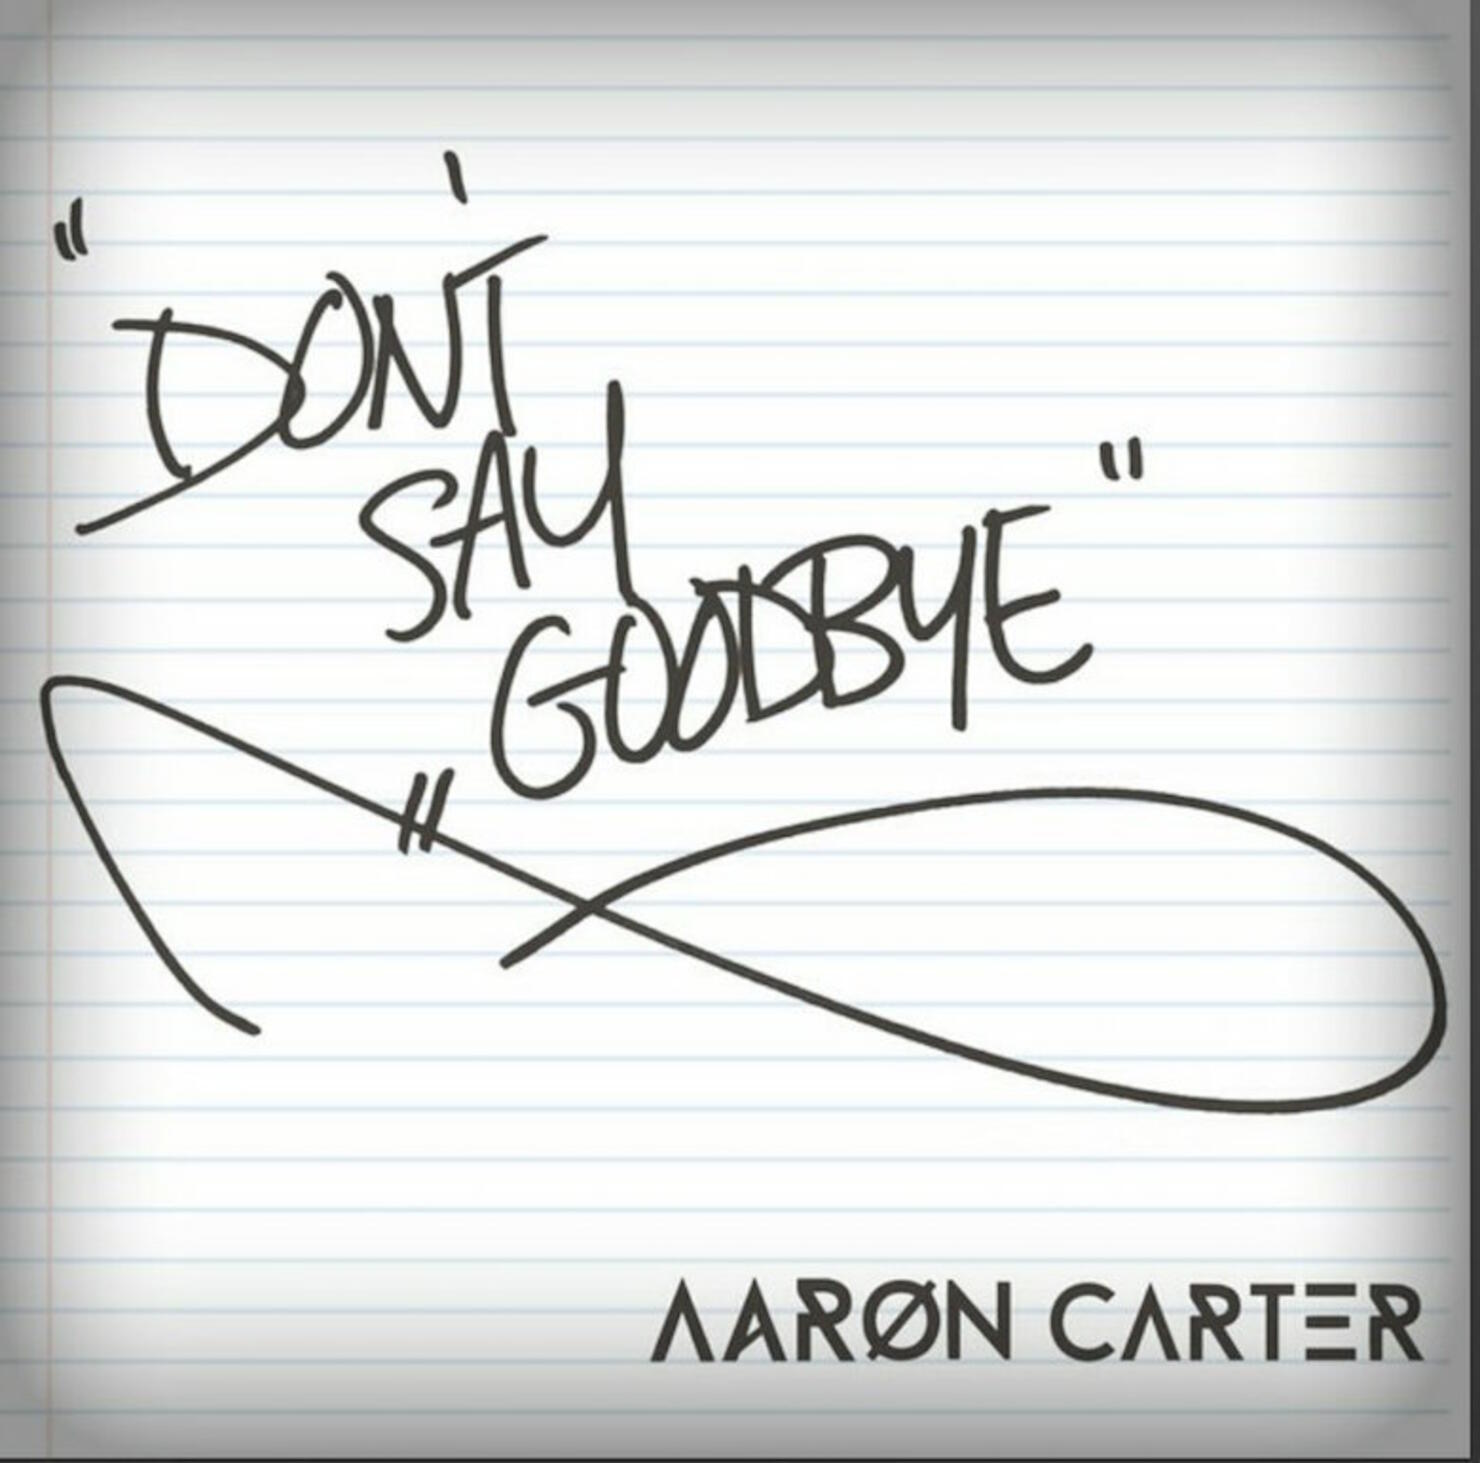 Aaron Carter - "Don't Say Goodbye"